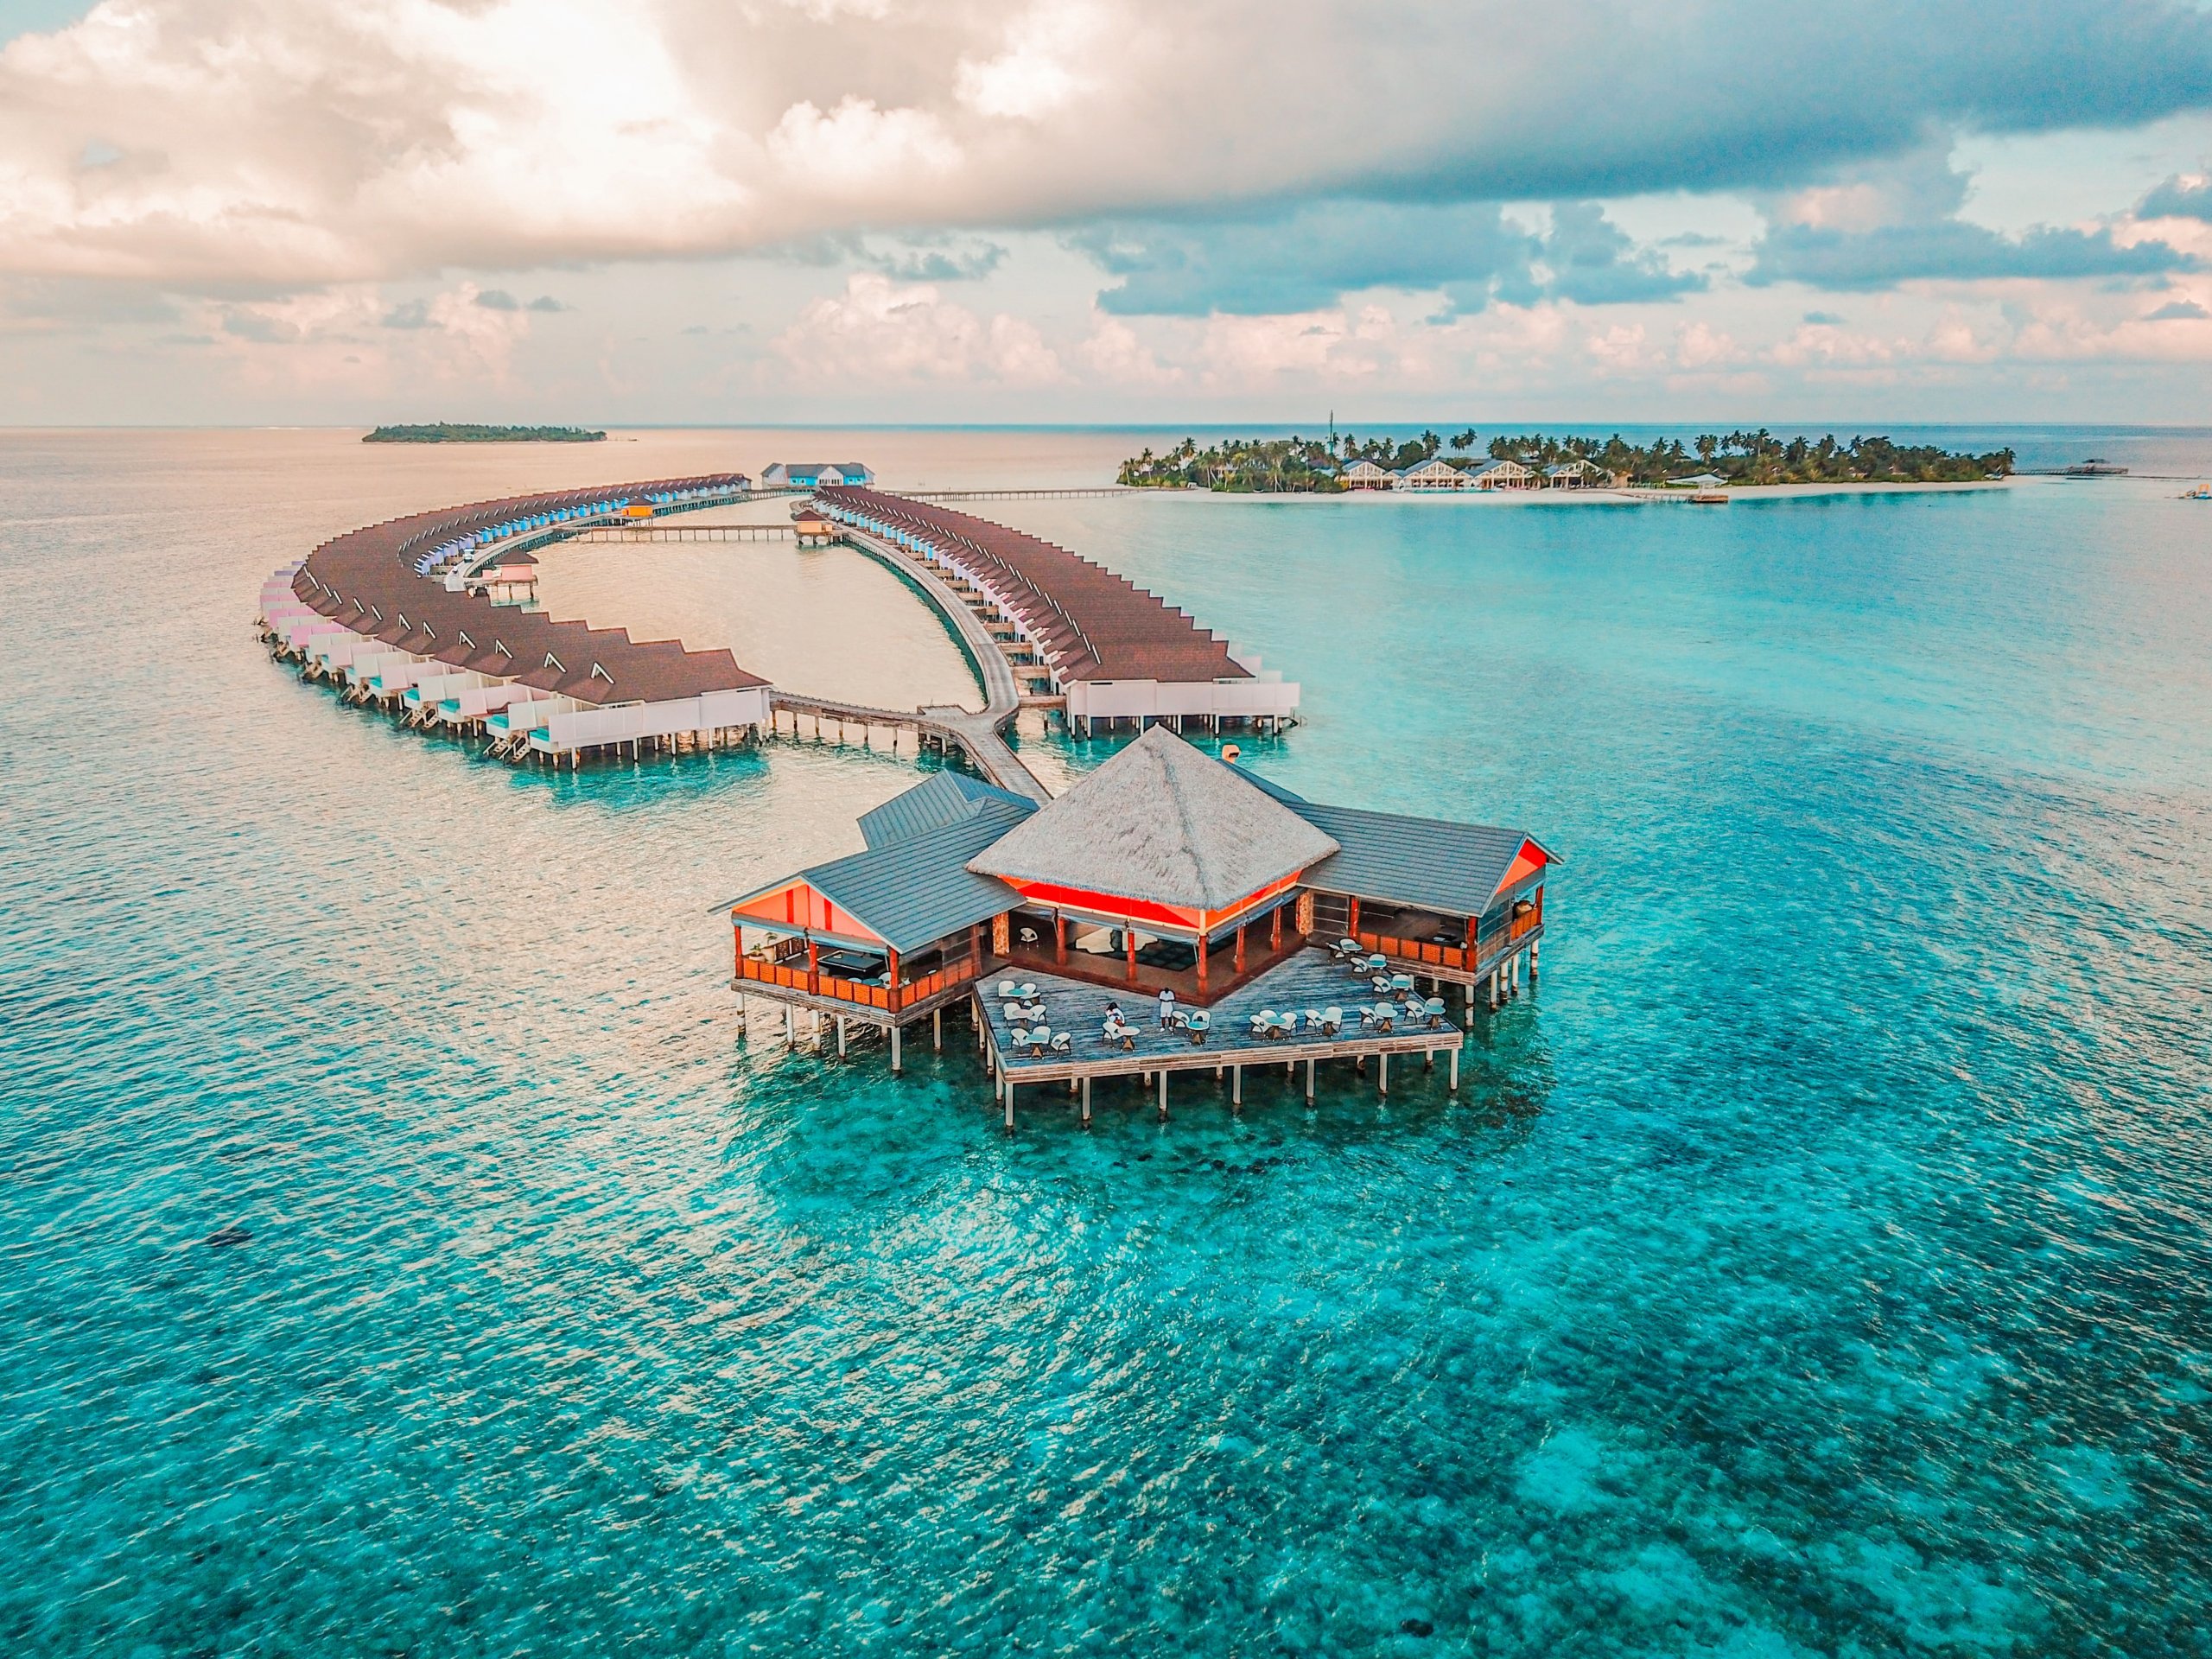 Ilhas Maldivas. Imagem disponível em Unsplash.